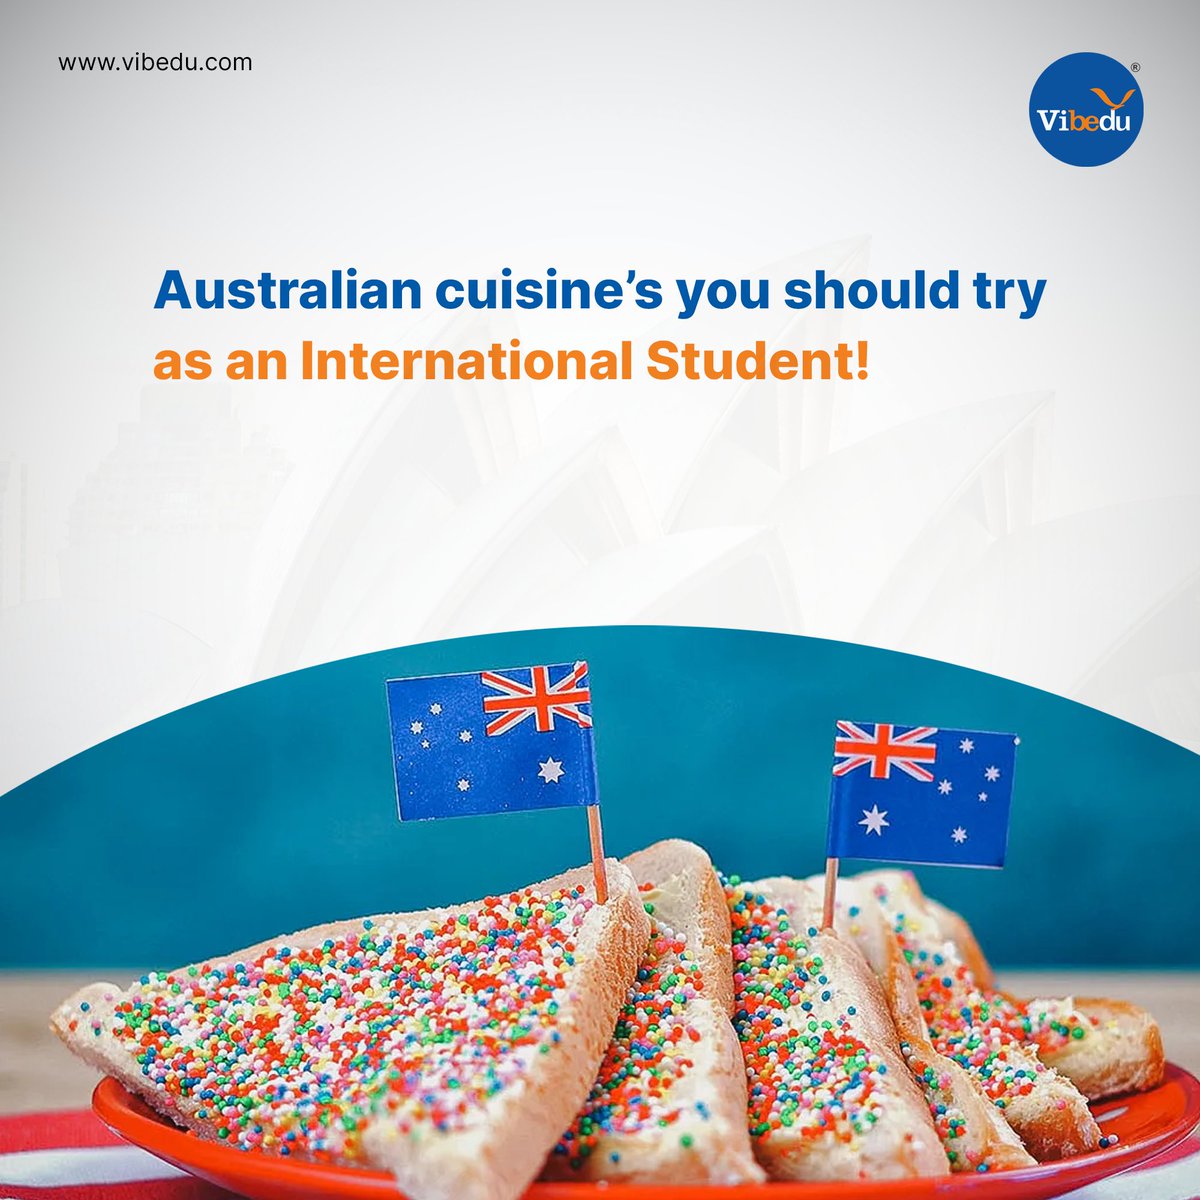 Applications to study in Australia are open now! 

Email: apply@vibedu.com
#aussieeats #australianfoodies #tasteofaustralia #internationalstudent #studyinginaustralia #explorepage #fyp #applynow #applicationprocess